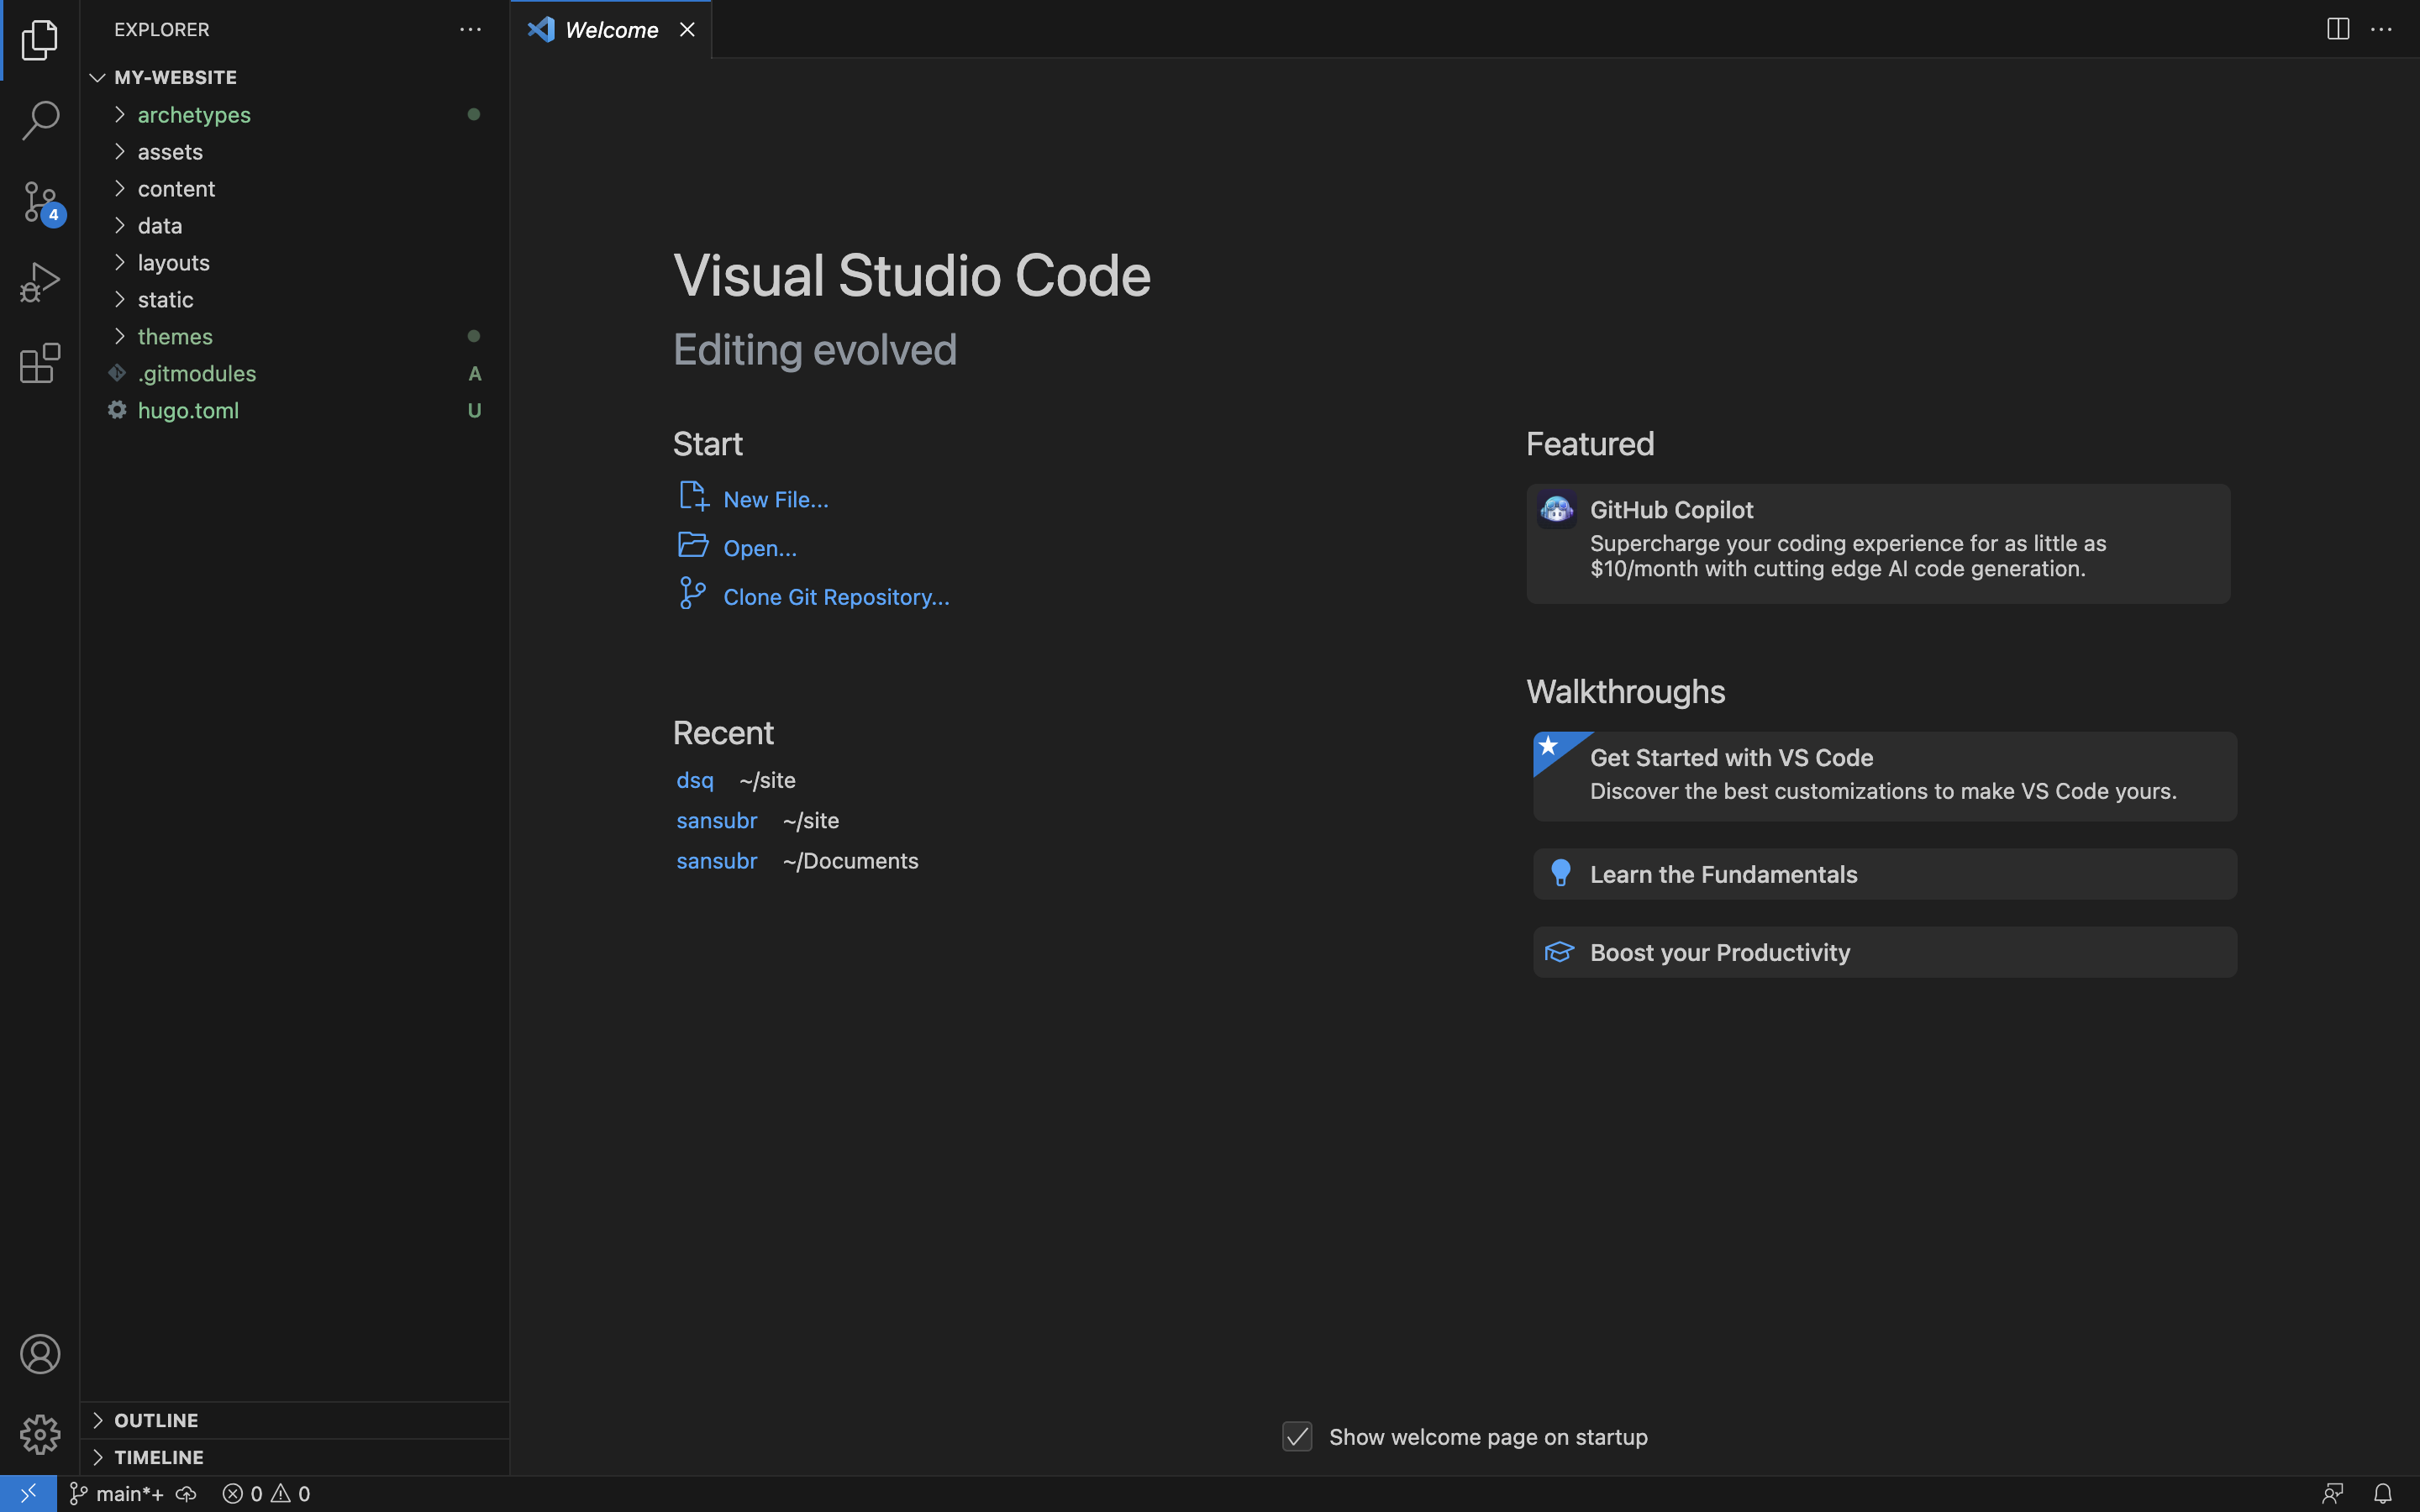 The my-website folder opened in Visual Studio Code.